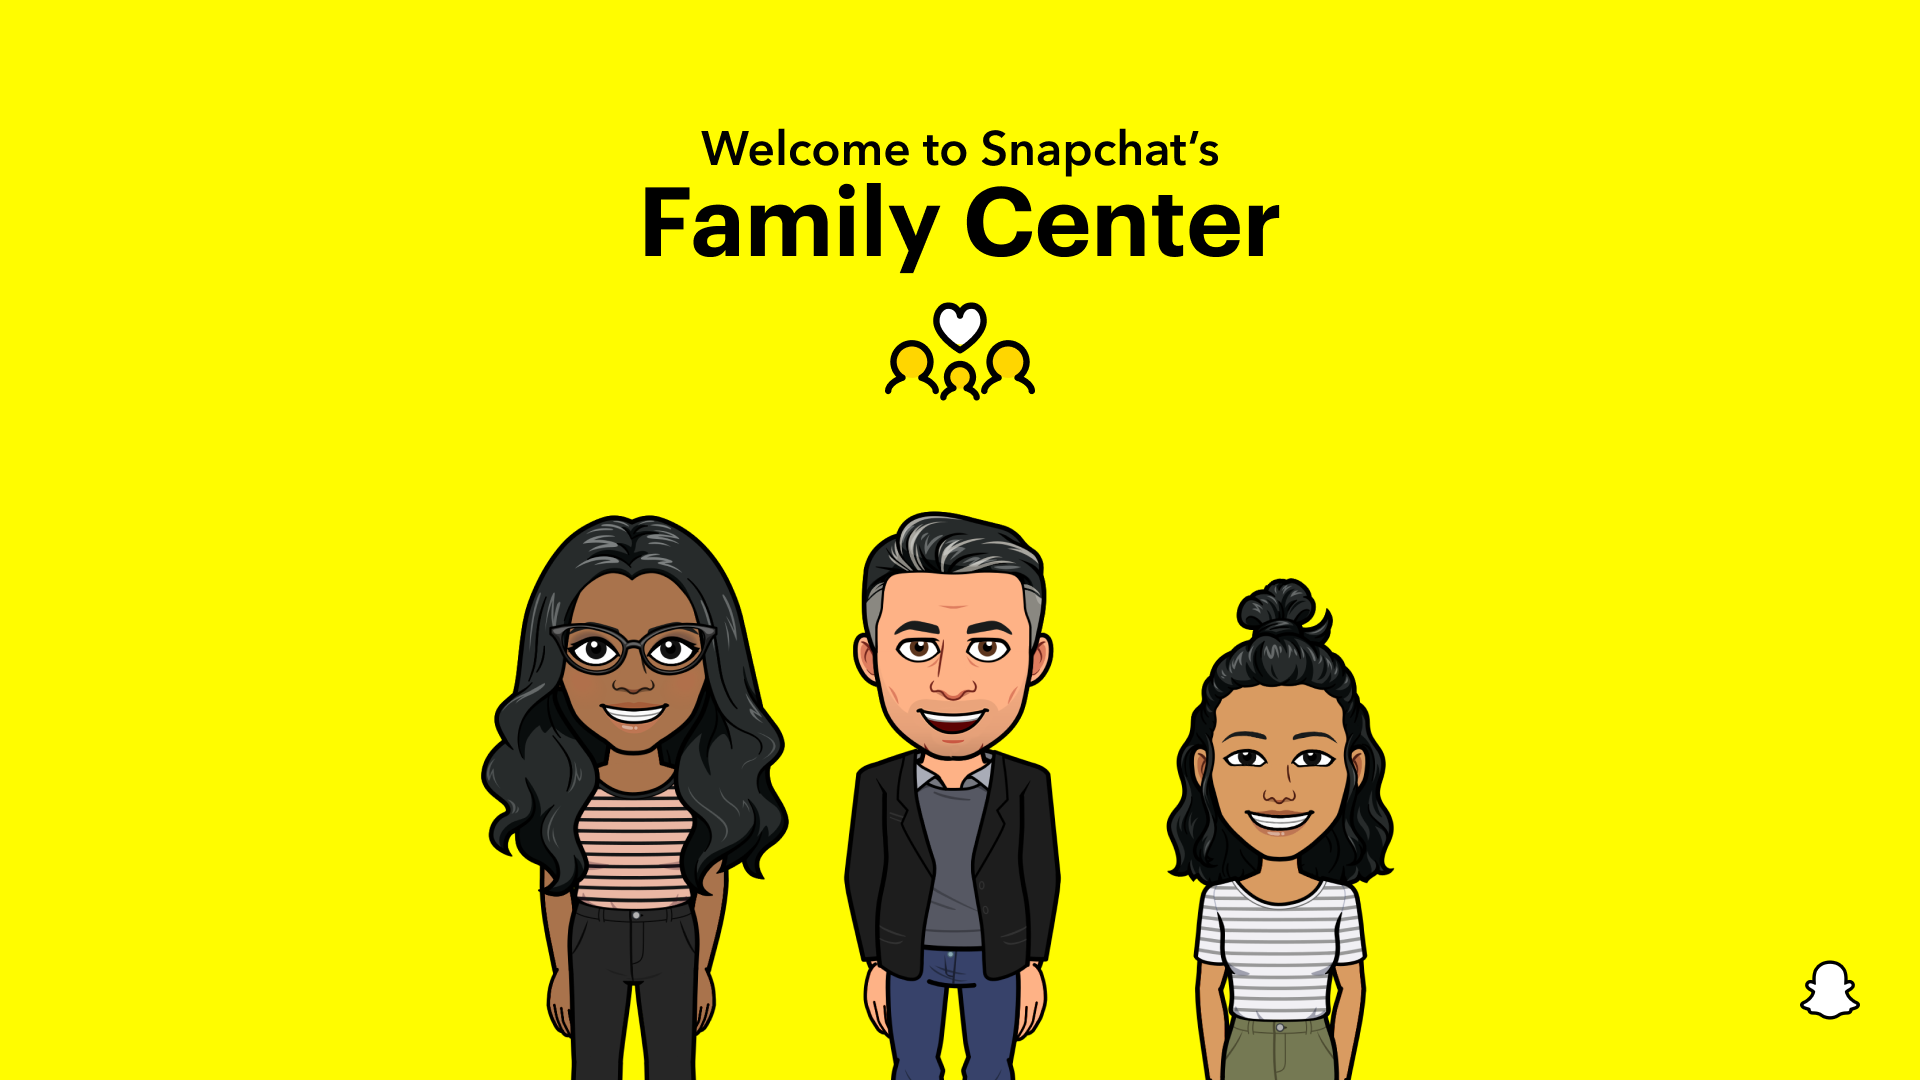 Snapchat's Family Center